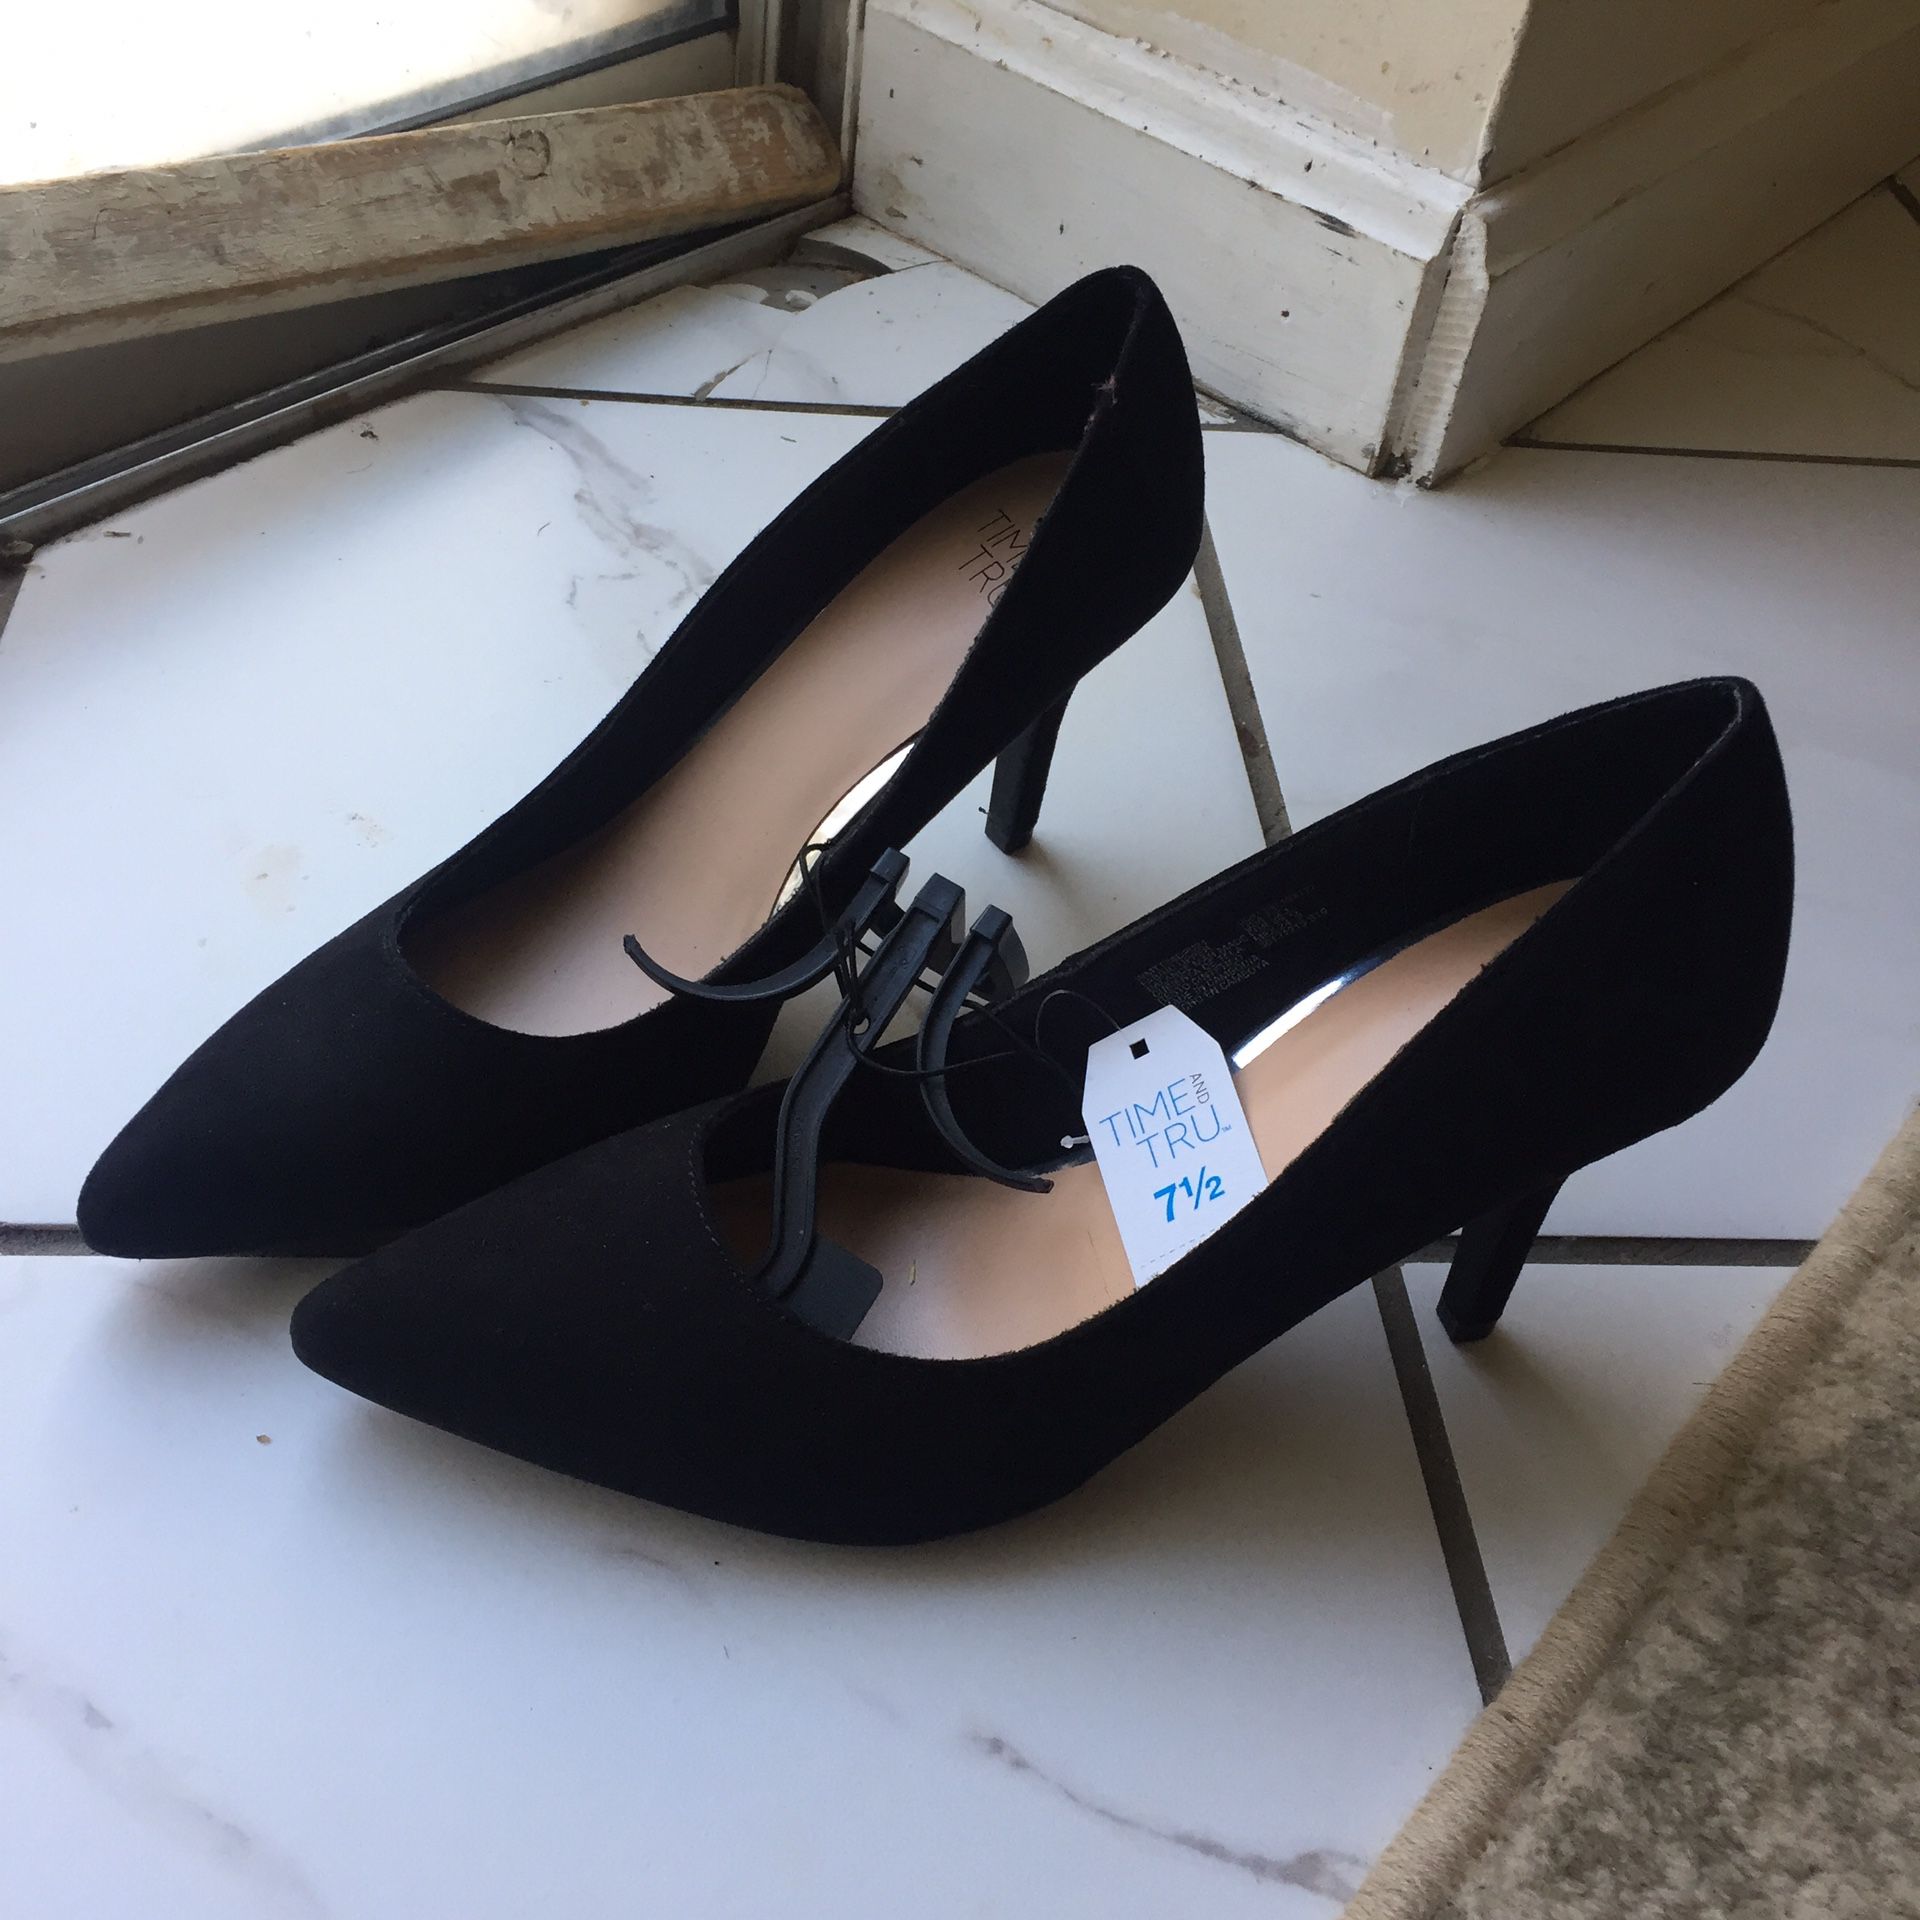 Black suede shoes heels size 7.5